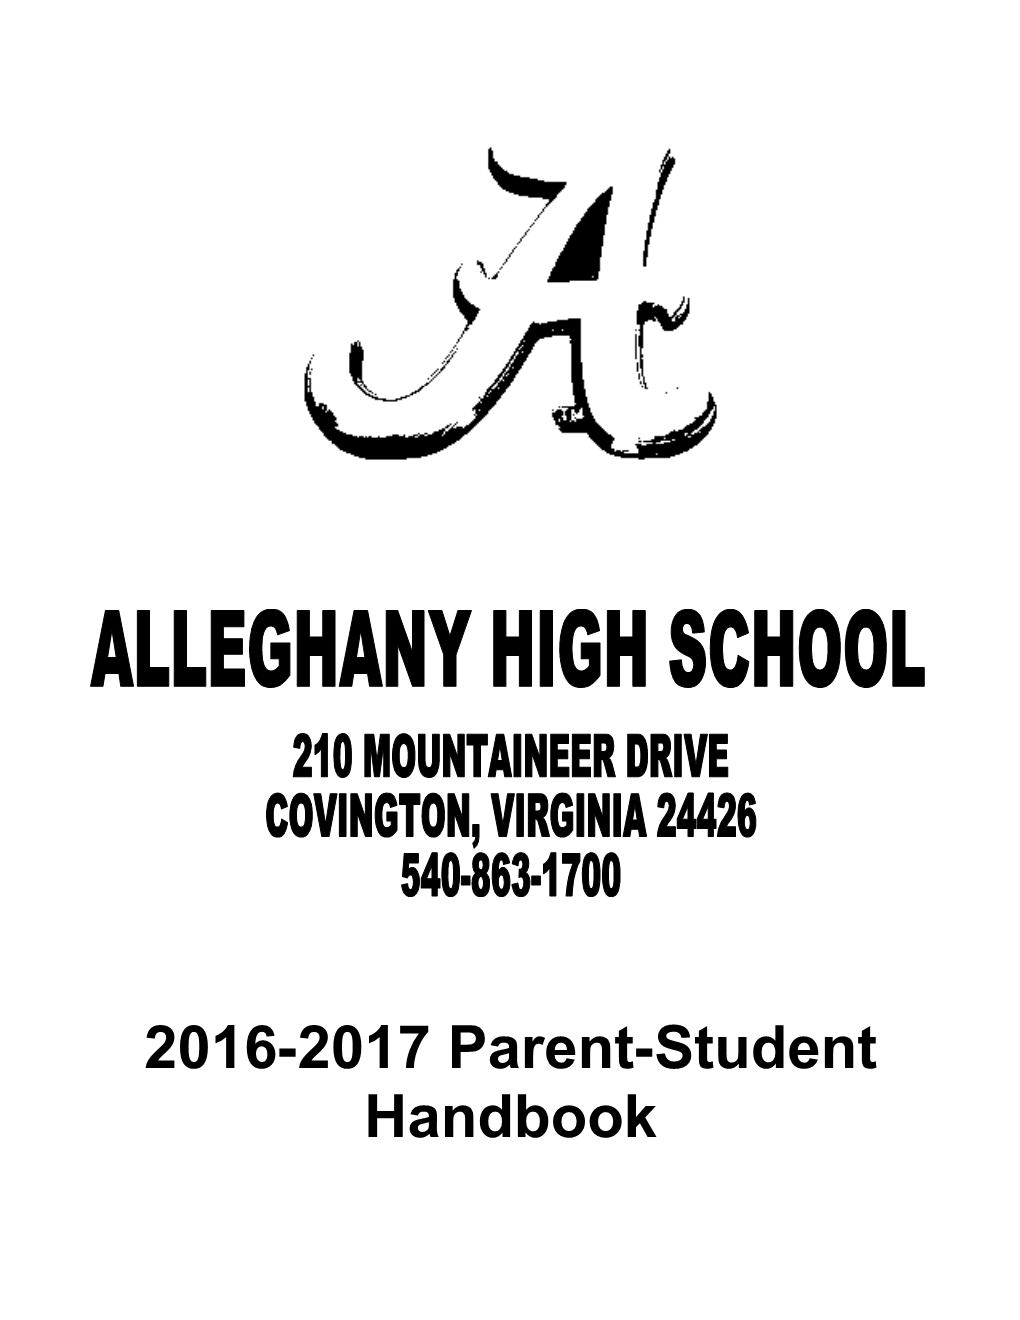 Alleghany High School